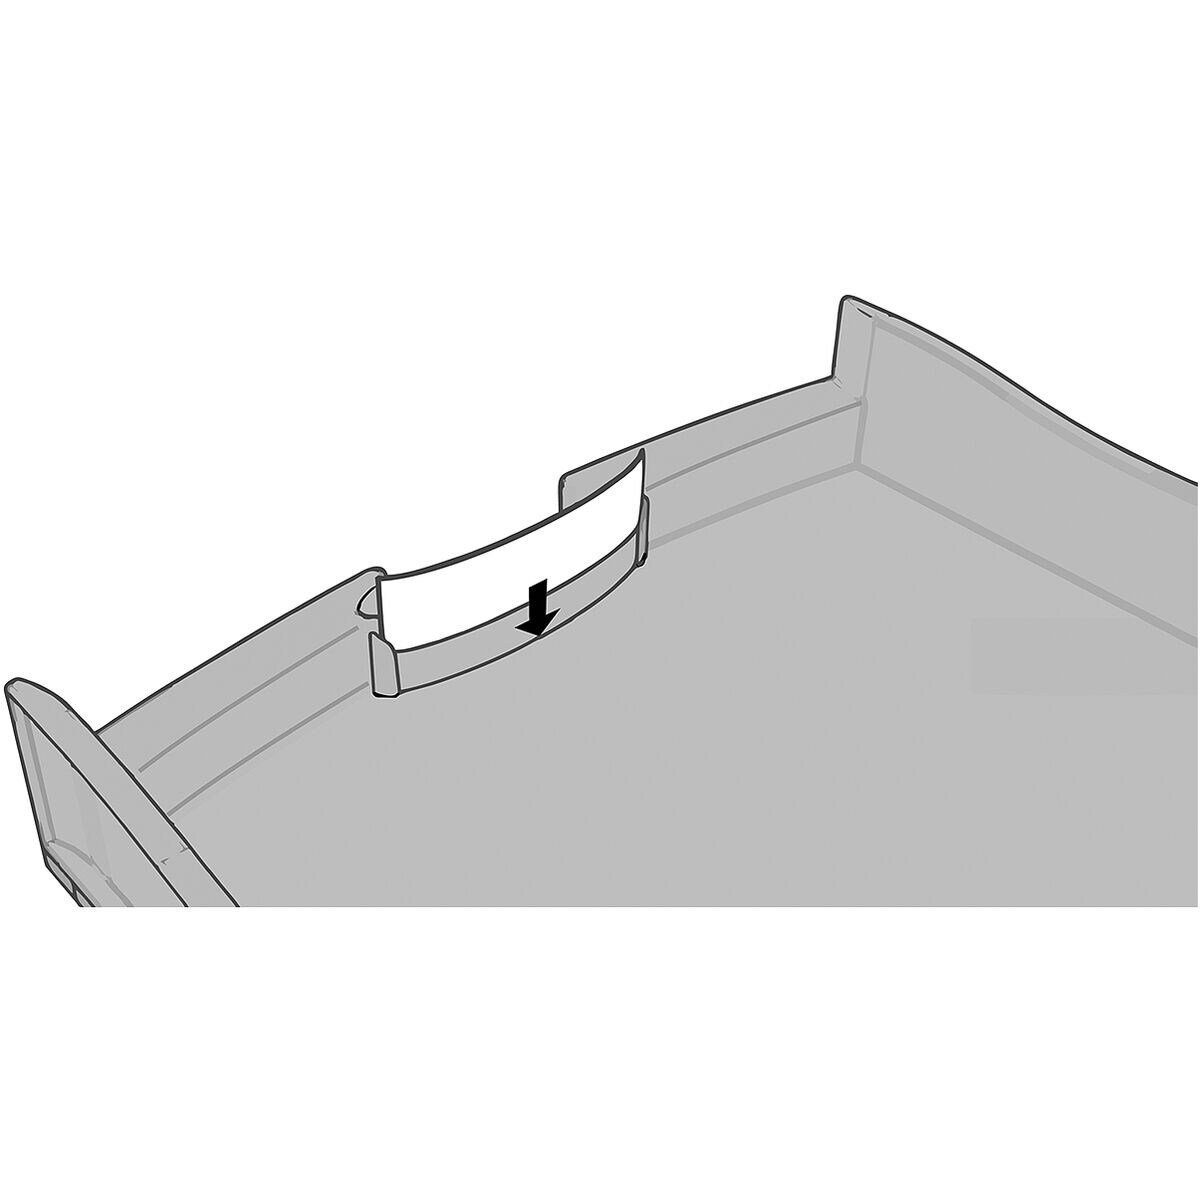 Impuls, 4 stapelbar Schubladenbox HAN mit offen, Schubladen, blau/transparent